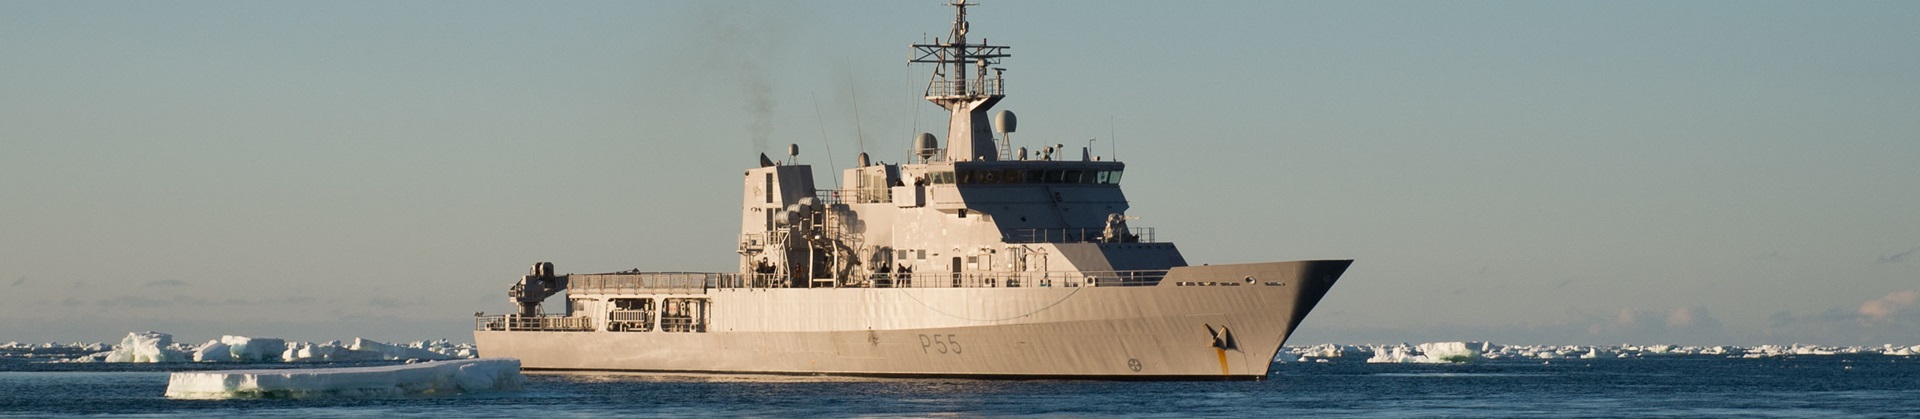 Navy-ship_2